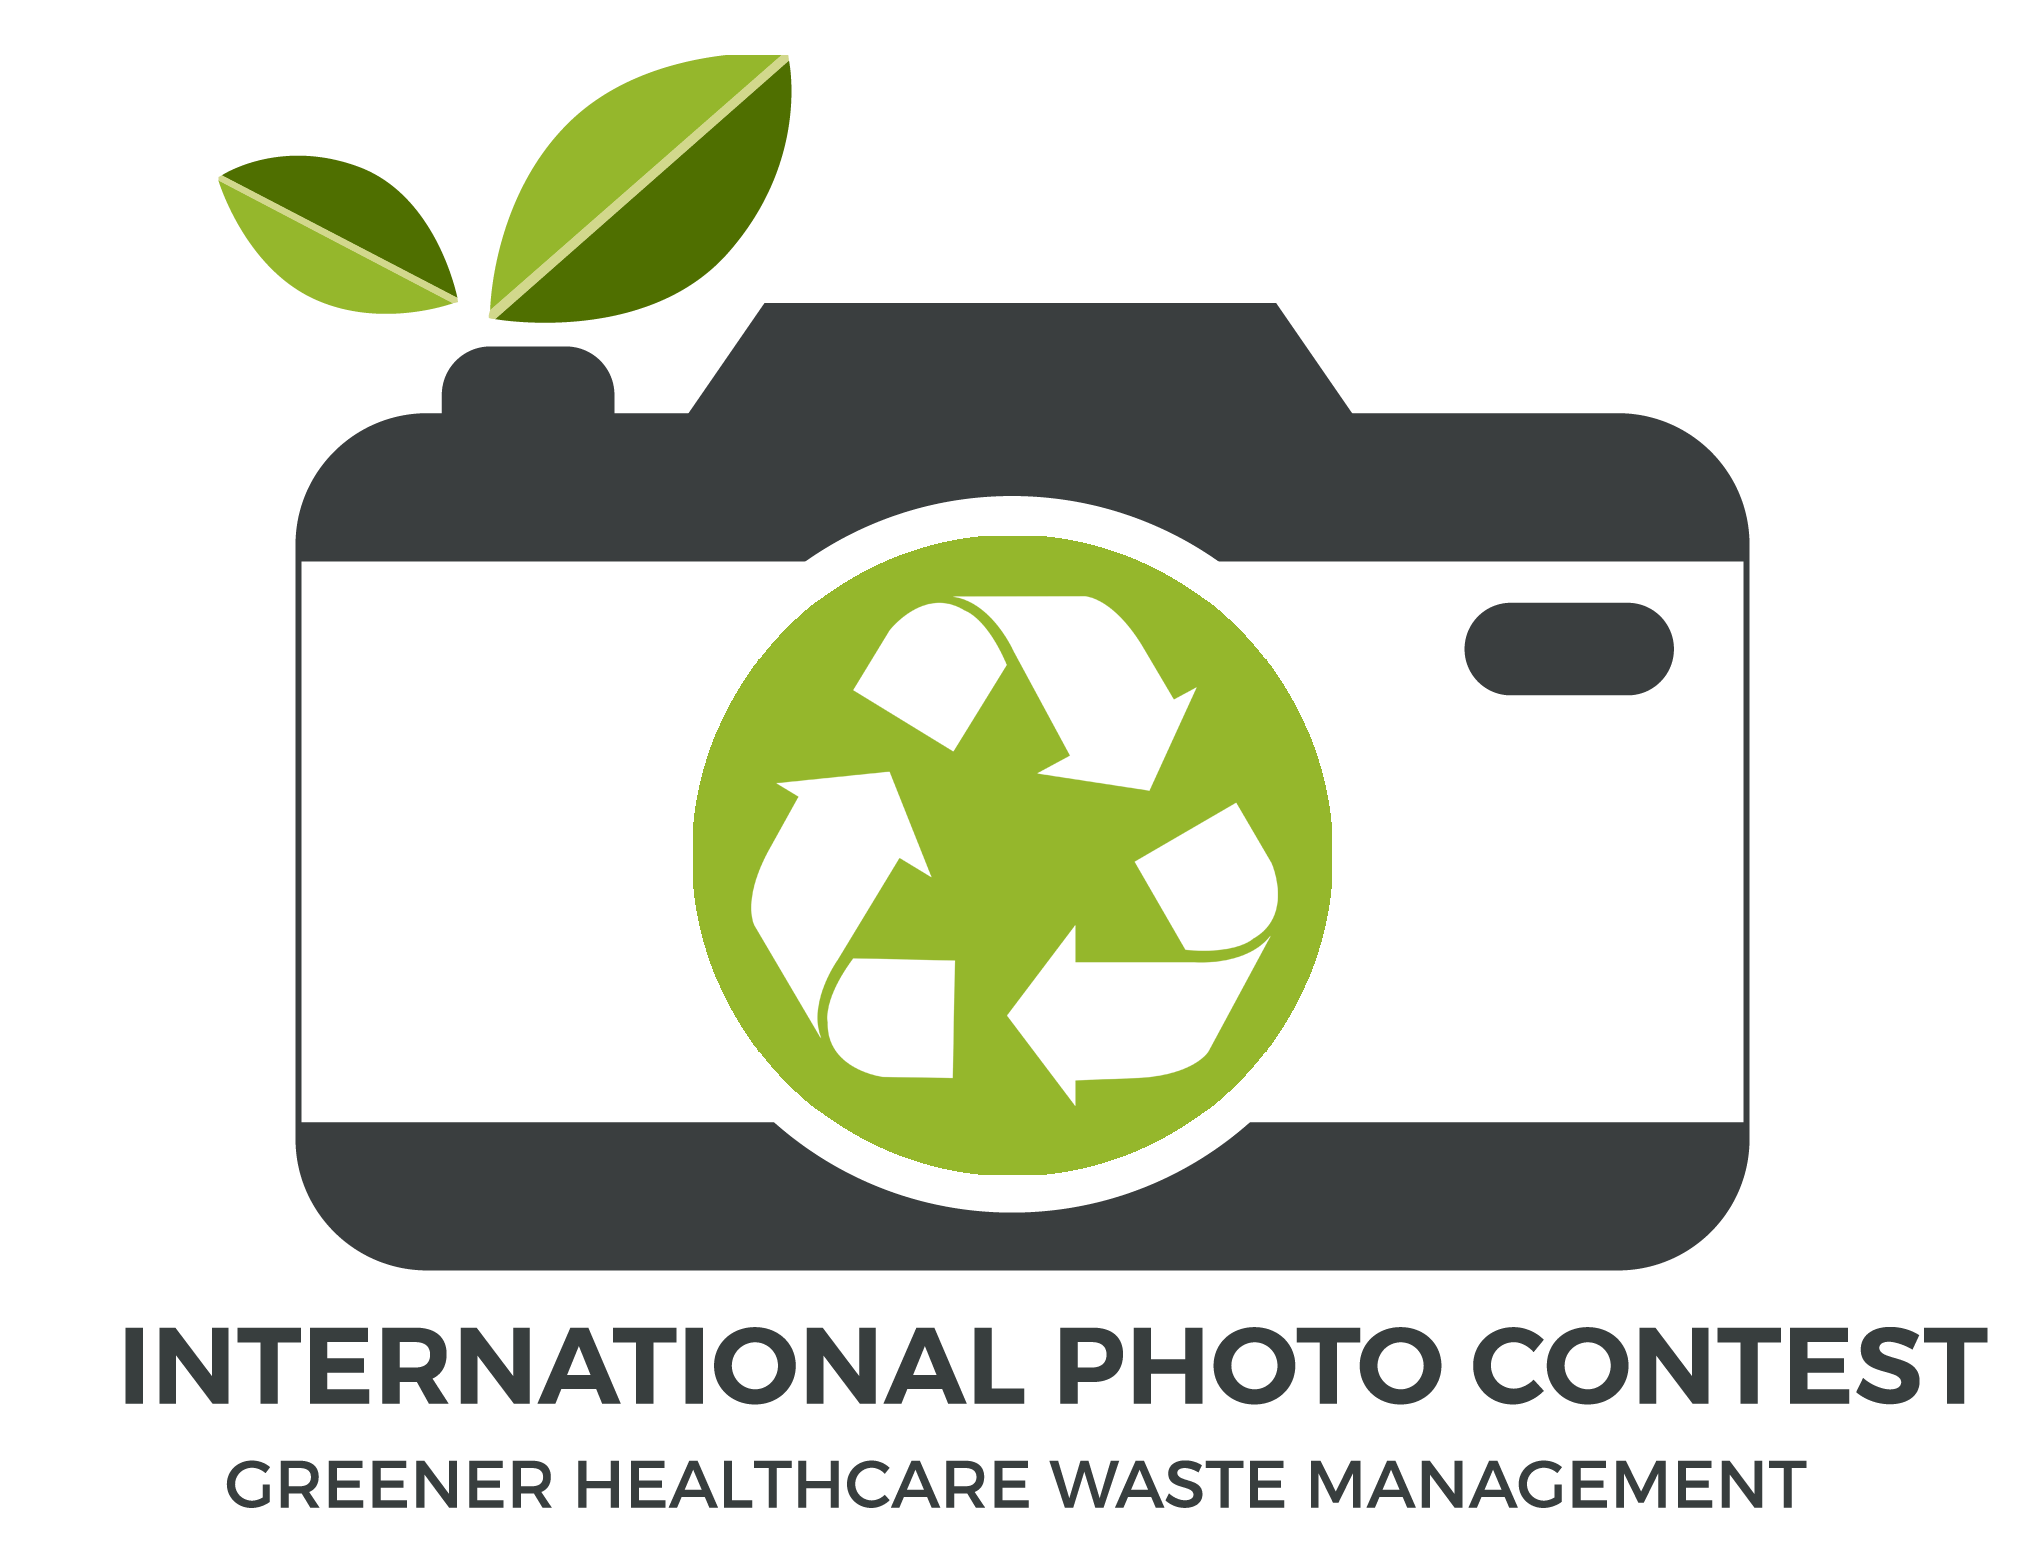 International Photo Contest on Greener Healthcare Waste Management